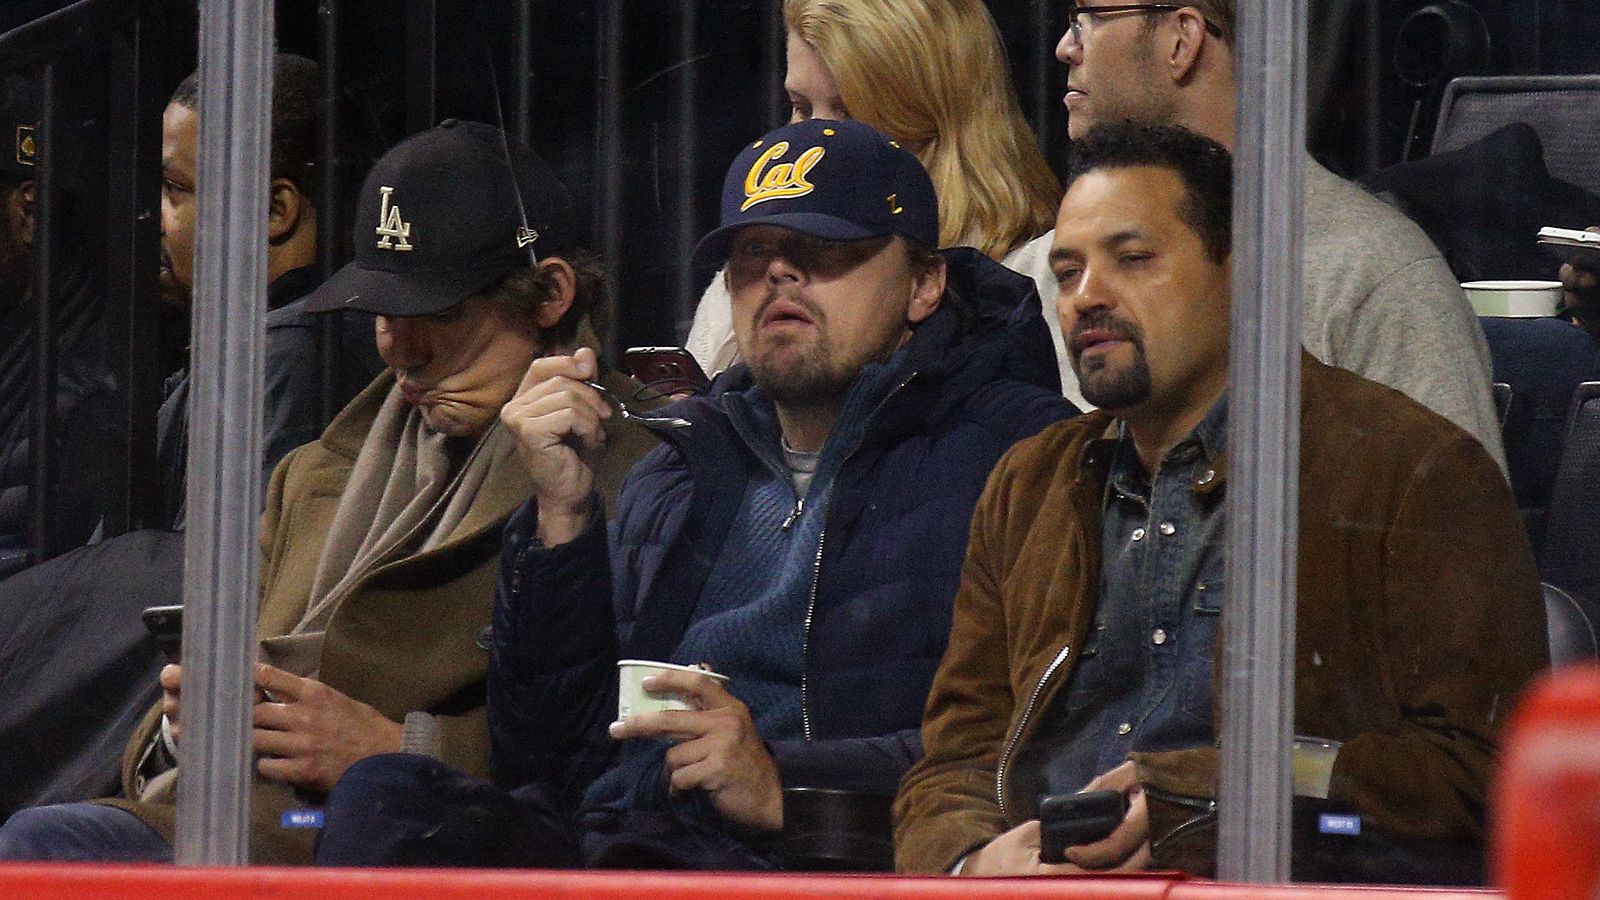 Leonardo DiCaprio spotted in Cal hat.